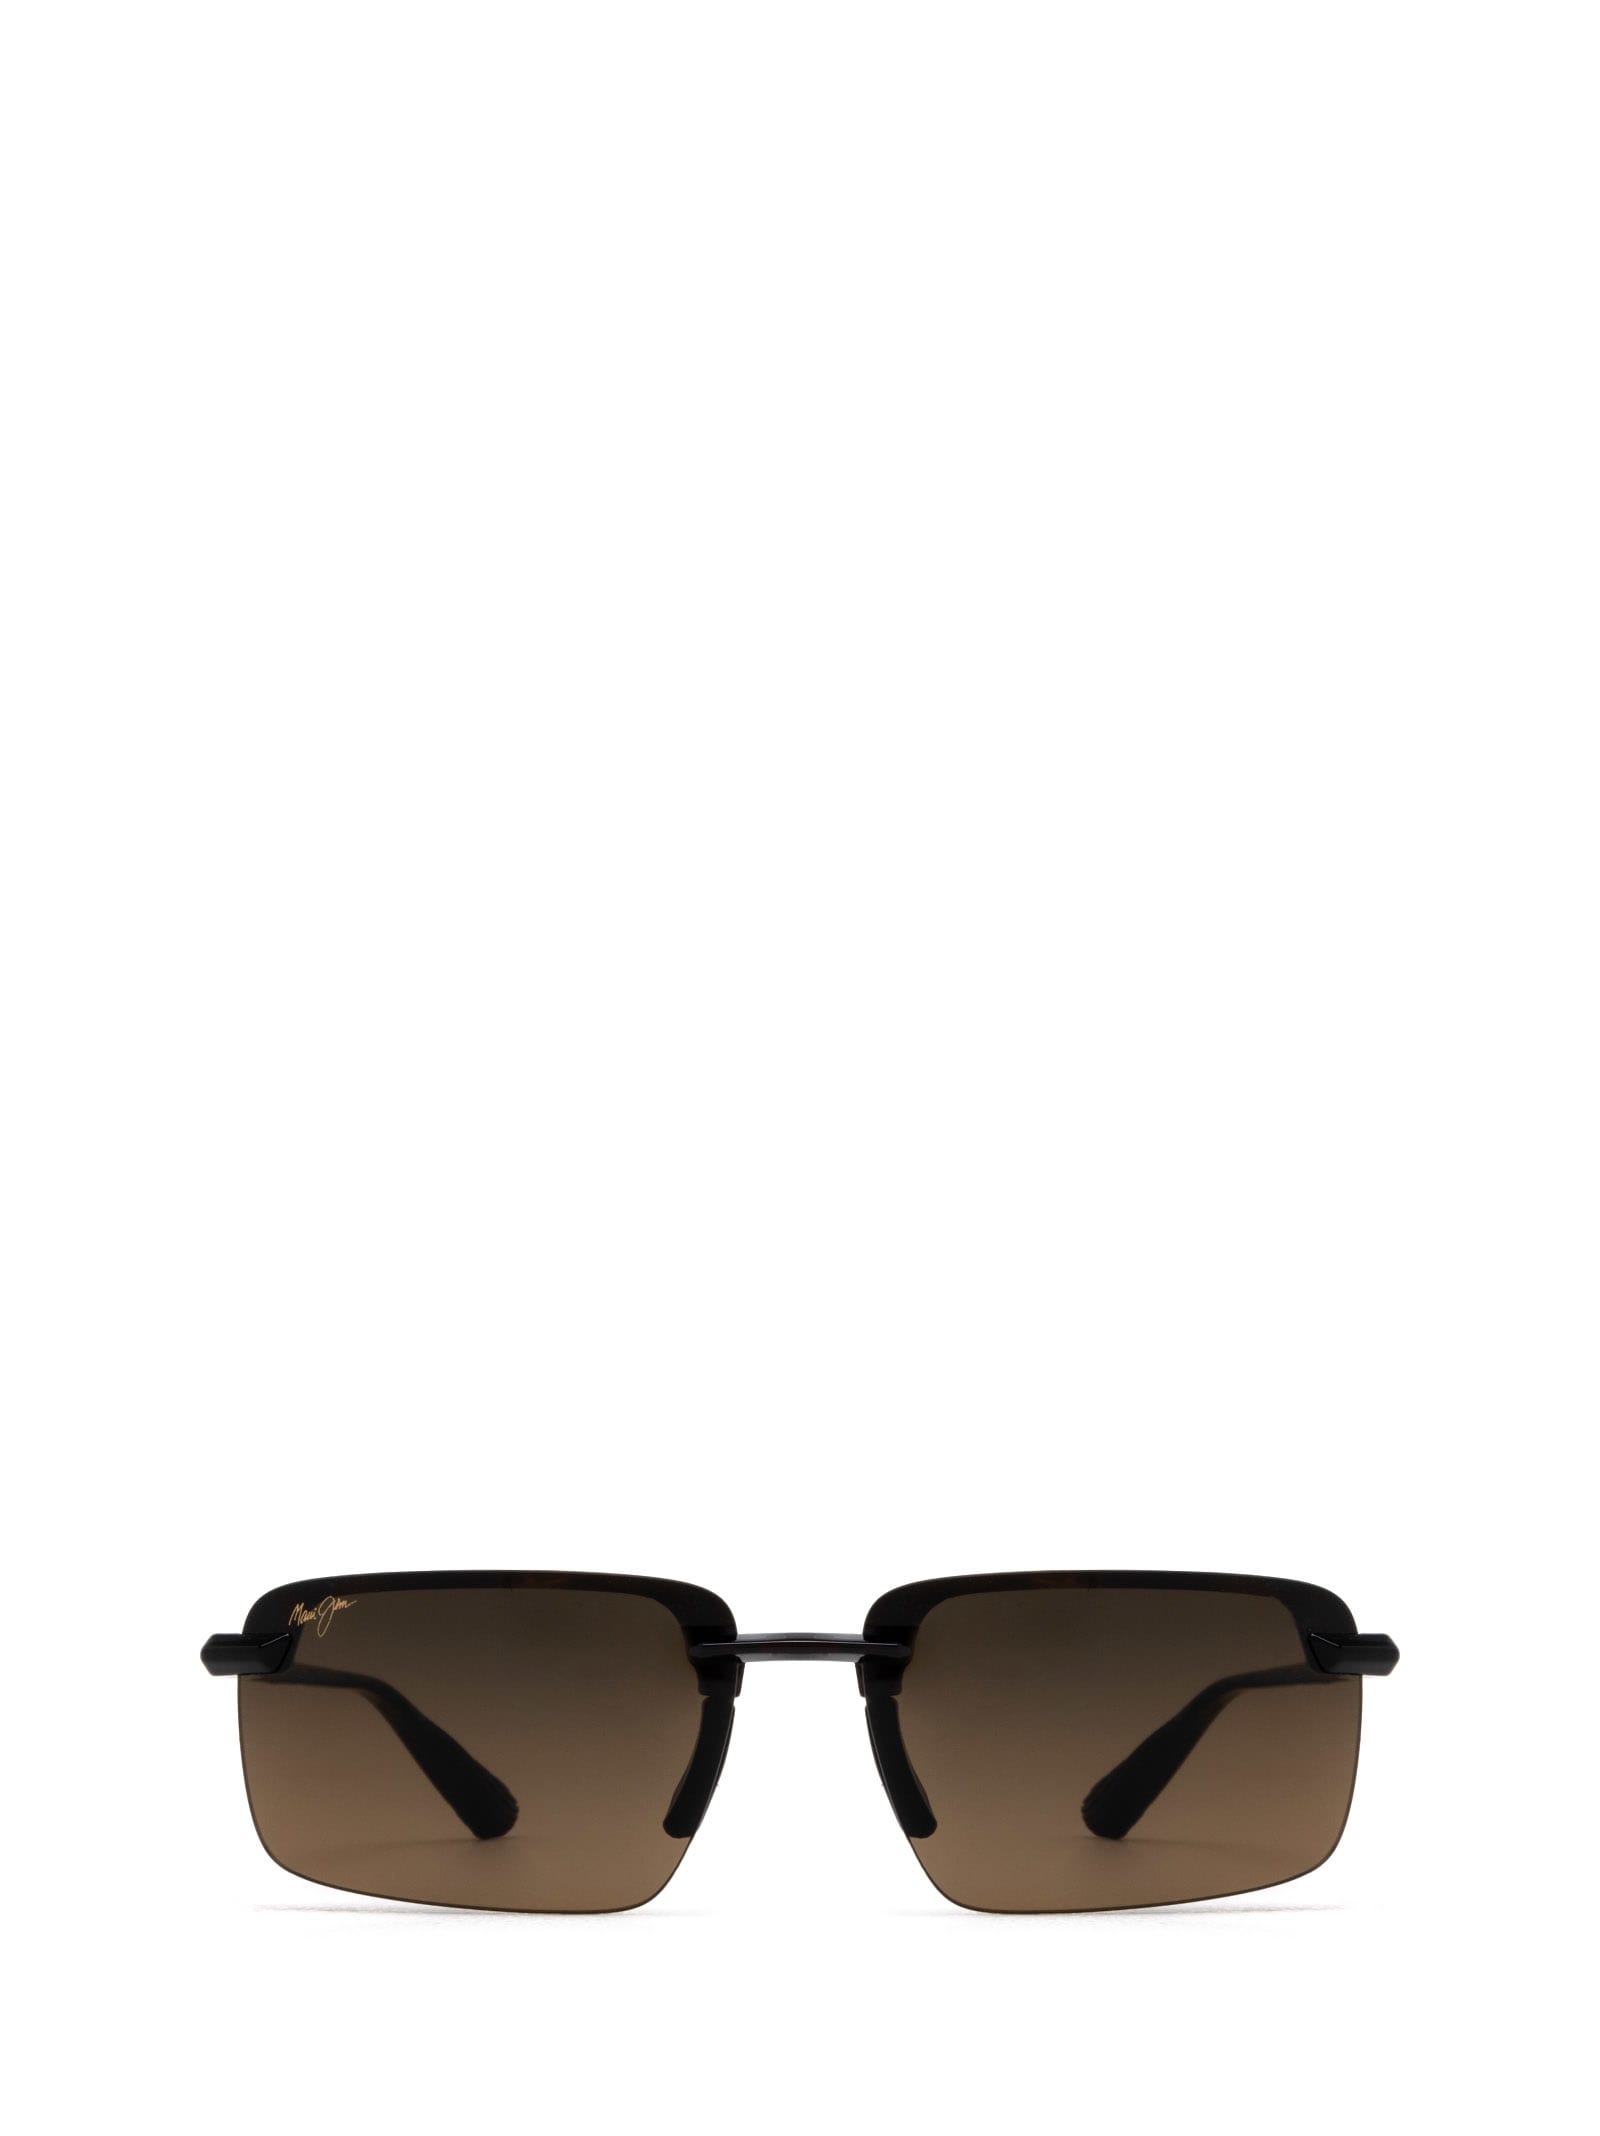 Shop Maui Jim Mj626 Shiny Dark Havana Sunglasses